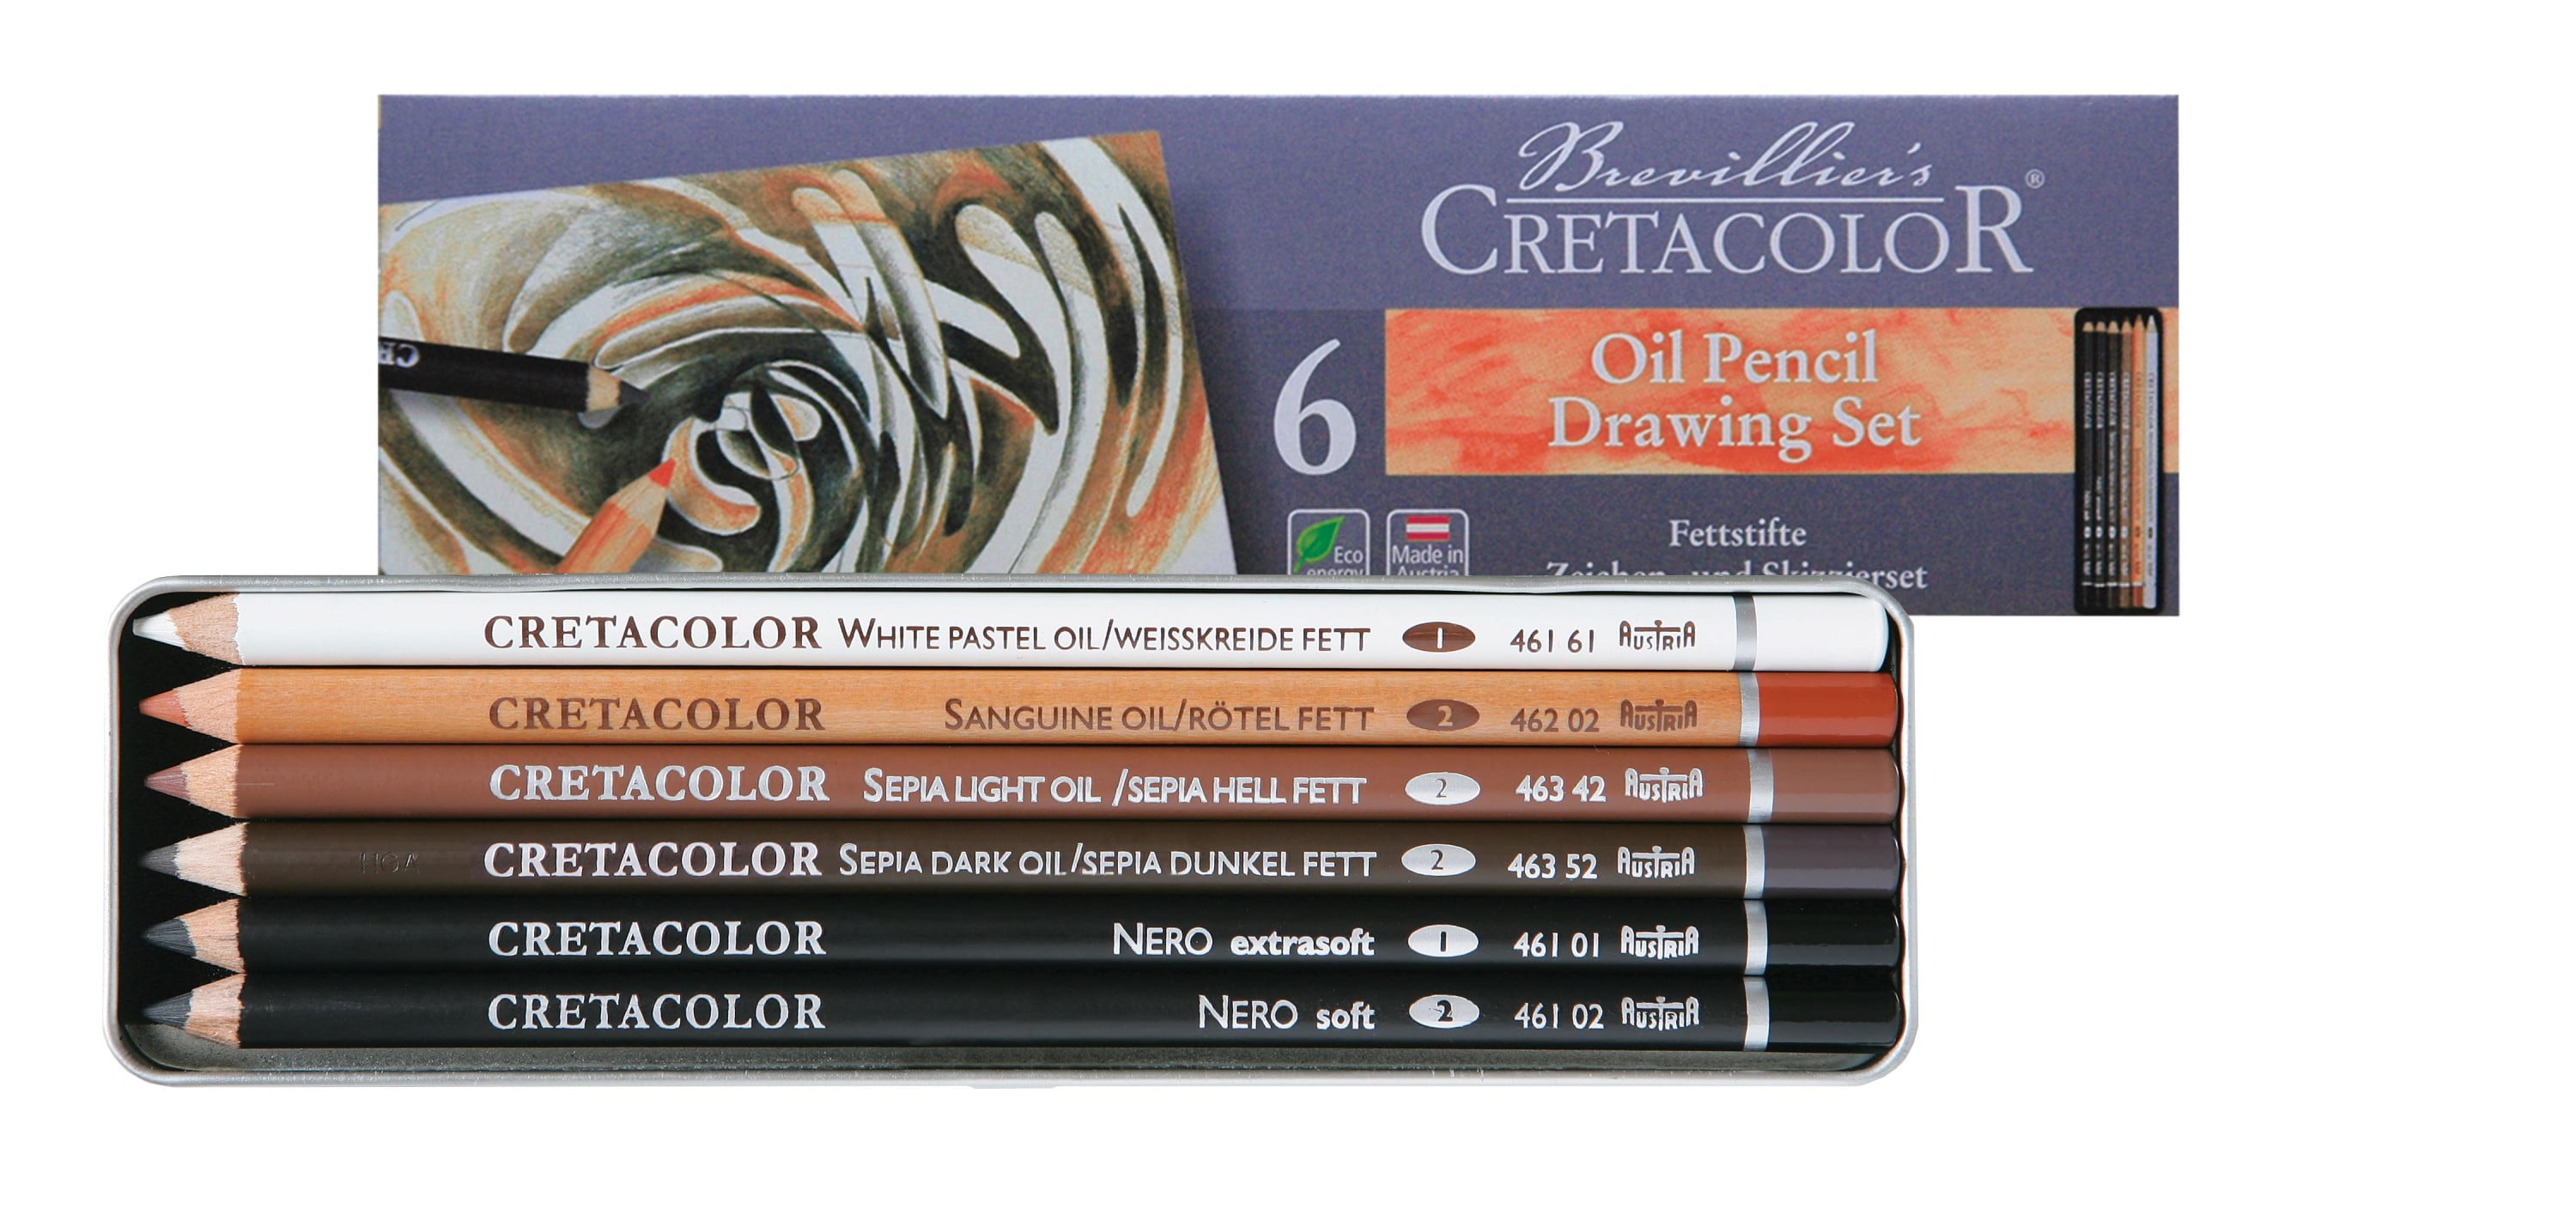 Cretacolor Oil Pencil Drawing Pocket Set